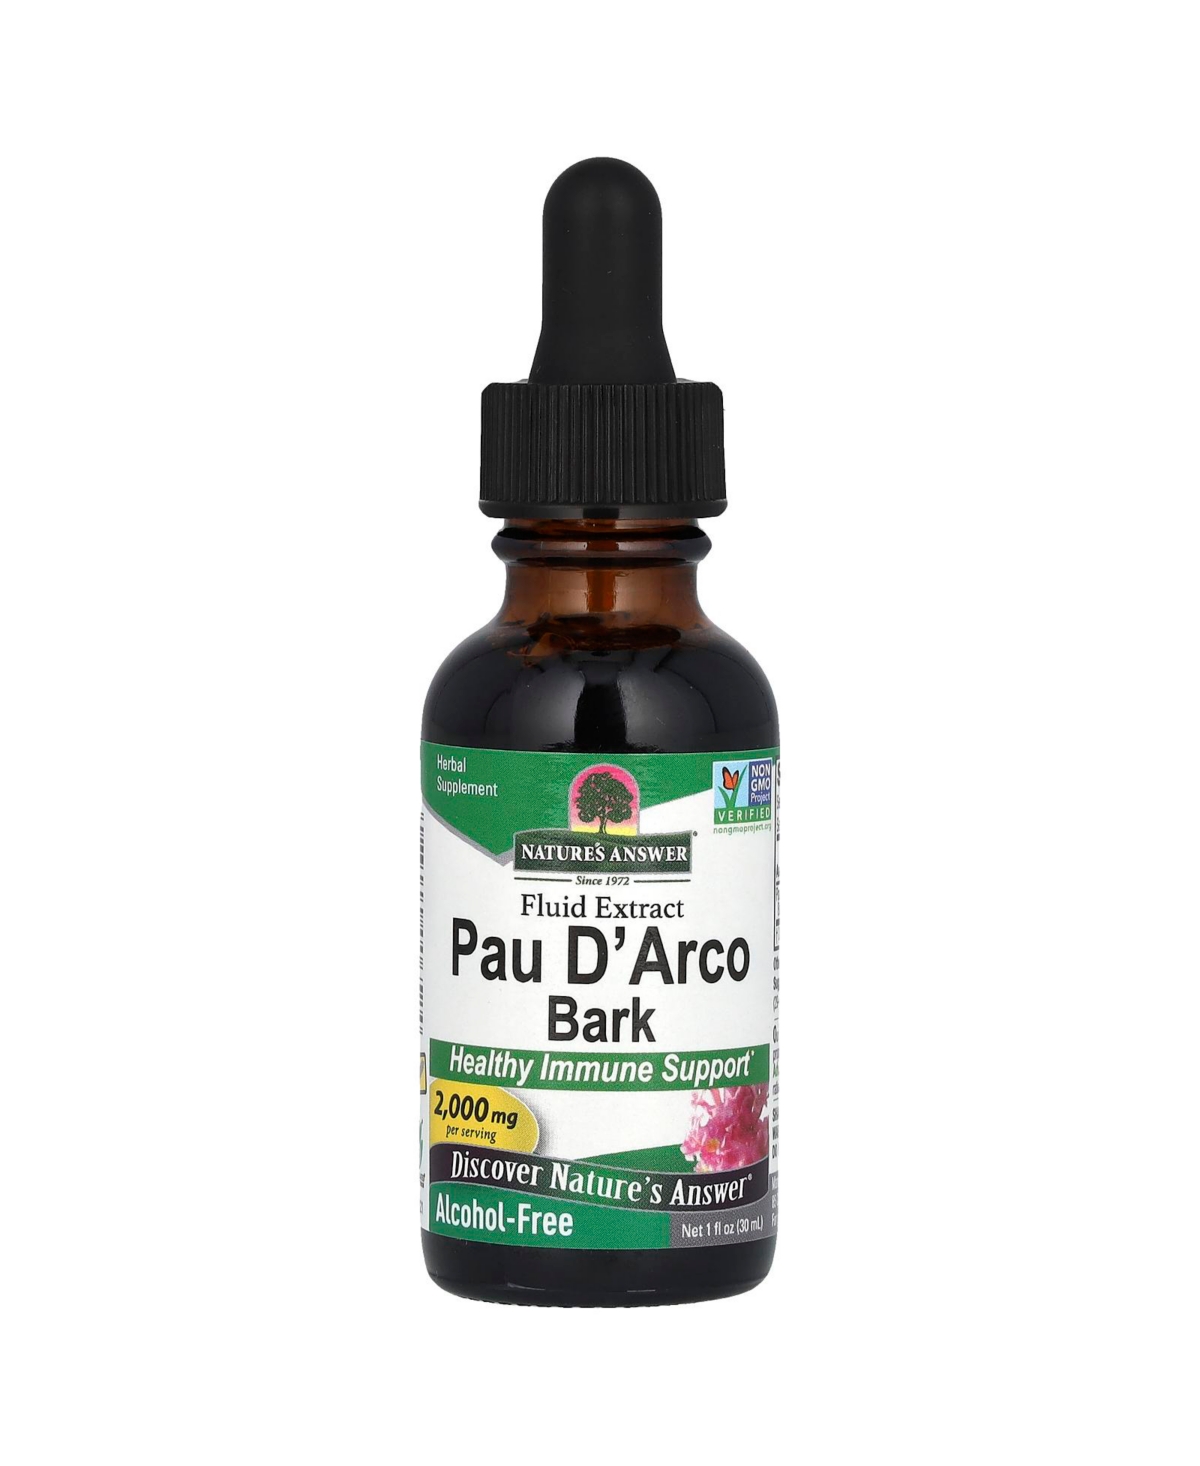 Pau D' Arco Bark Alcohol-Free 2 000 mg - 1 fl oz (30 ml) - Assorted Pre-pack (See Table